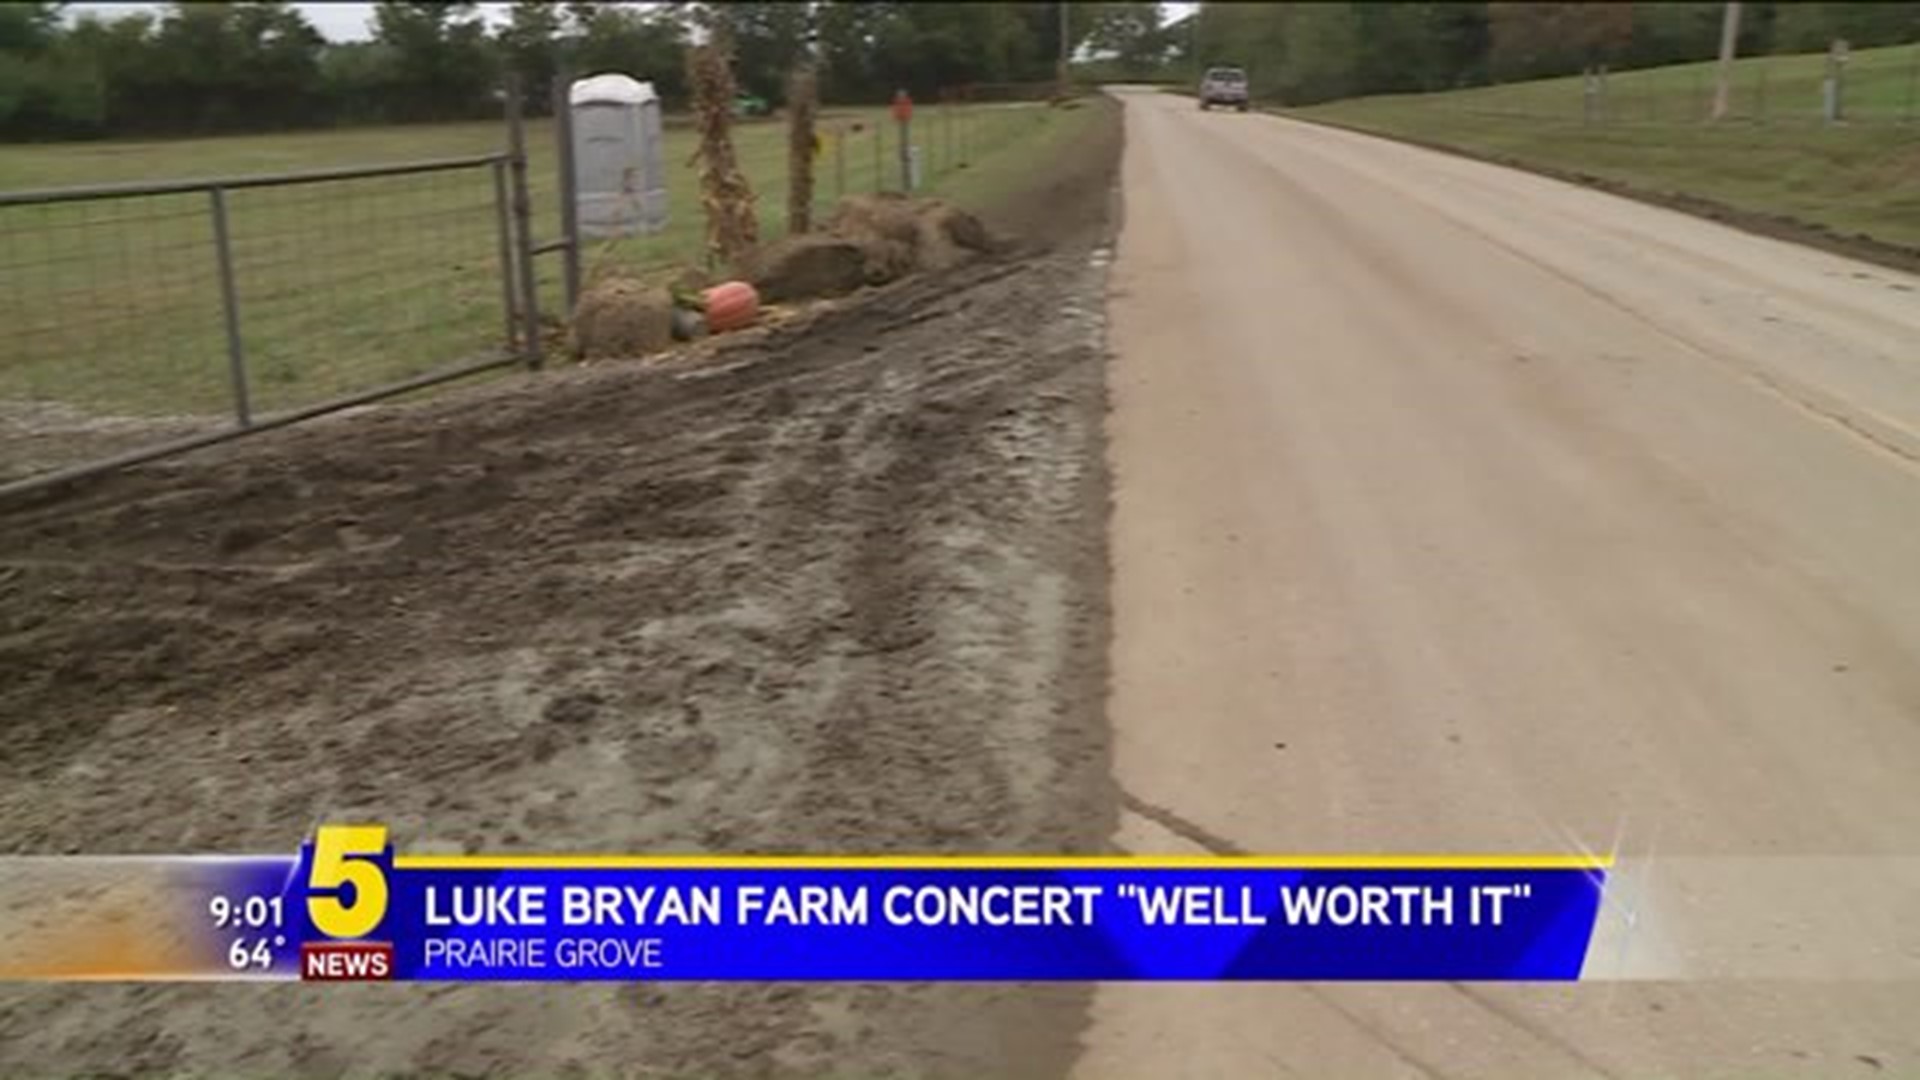 Luke Bryan Farm Concert "Well Worth It"